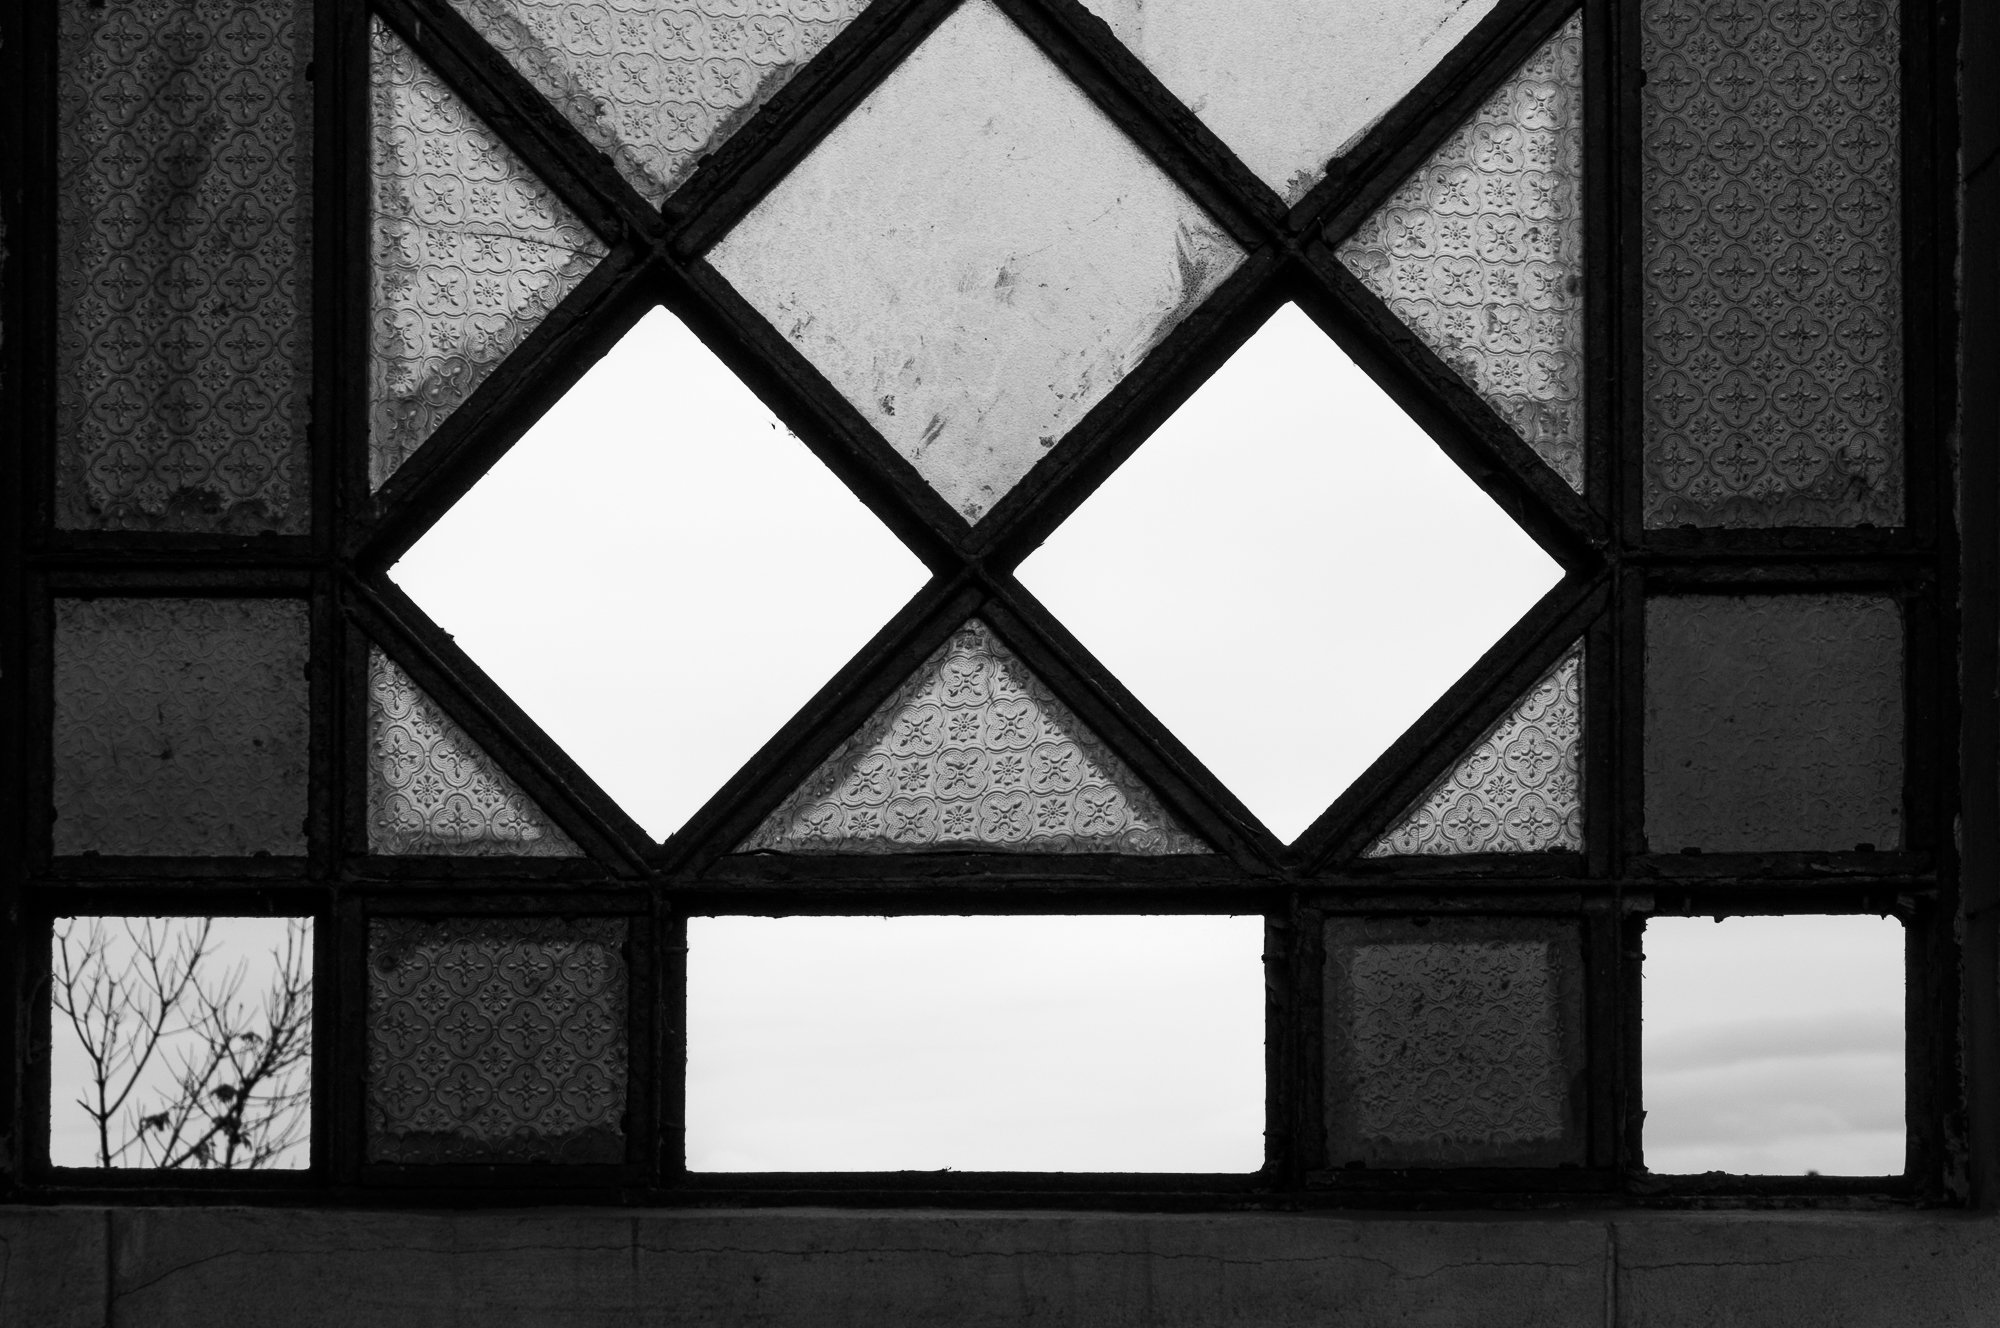 Adam Mazek Photography Warsaw (Warszawa) 2019. Post: "Strange fascination, fascinating me.." Minimalism. Broken window. Geometry.